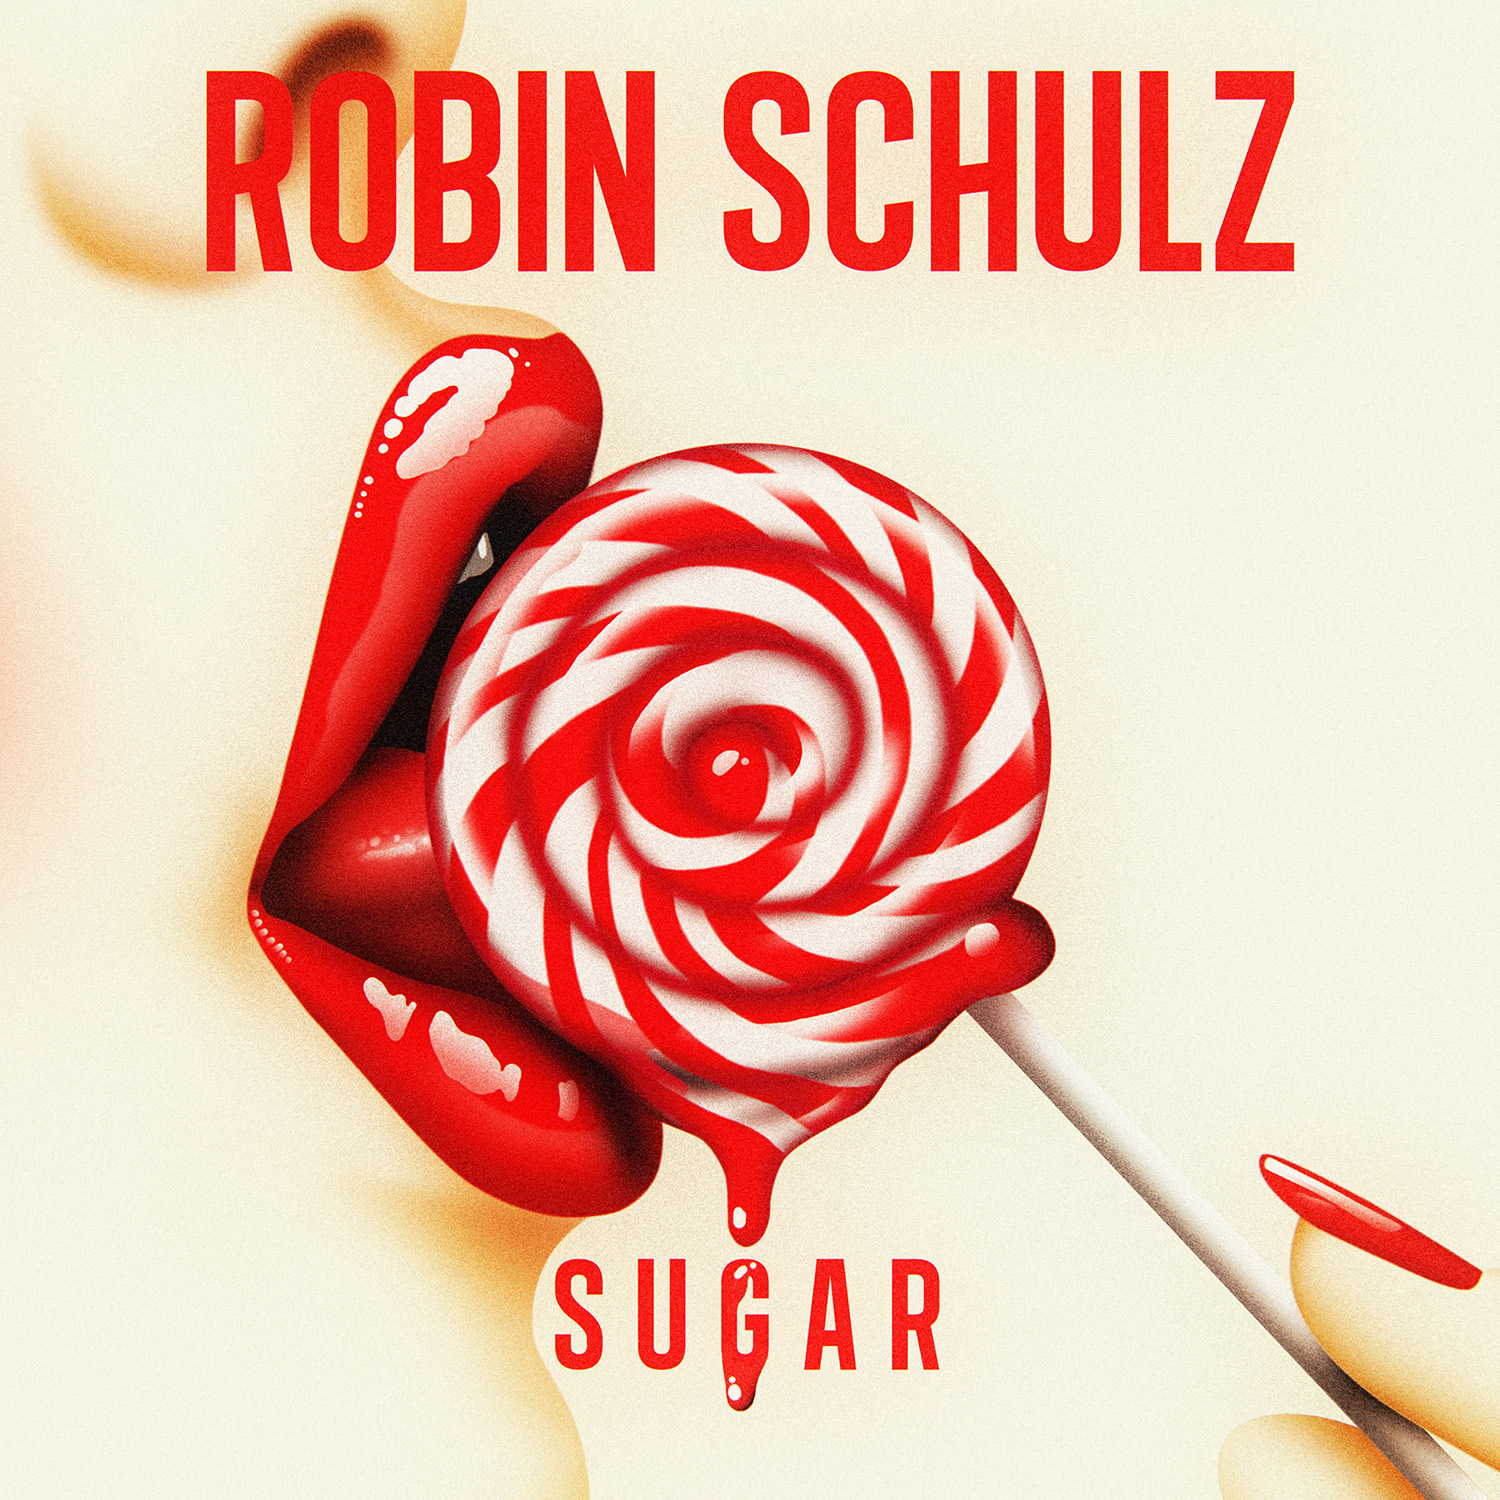 Robin Schulz. Sugar. 1